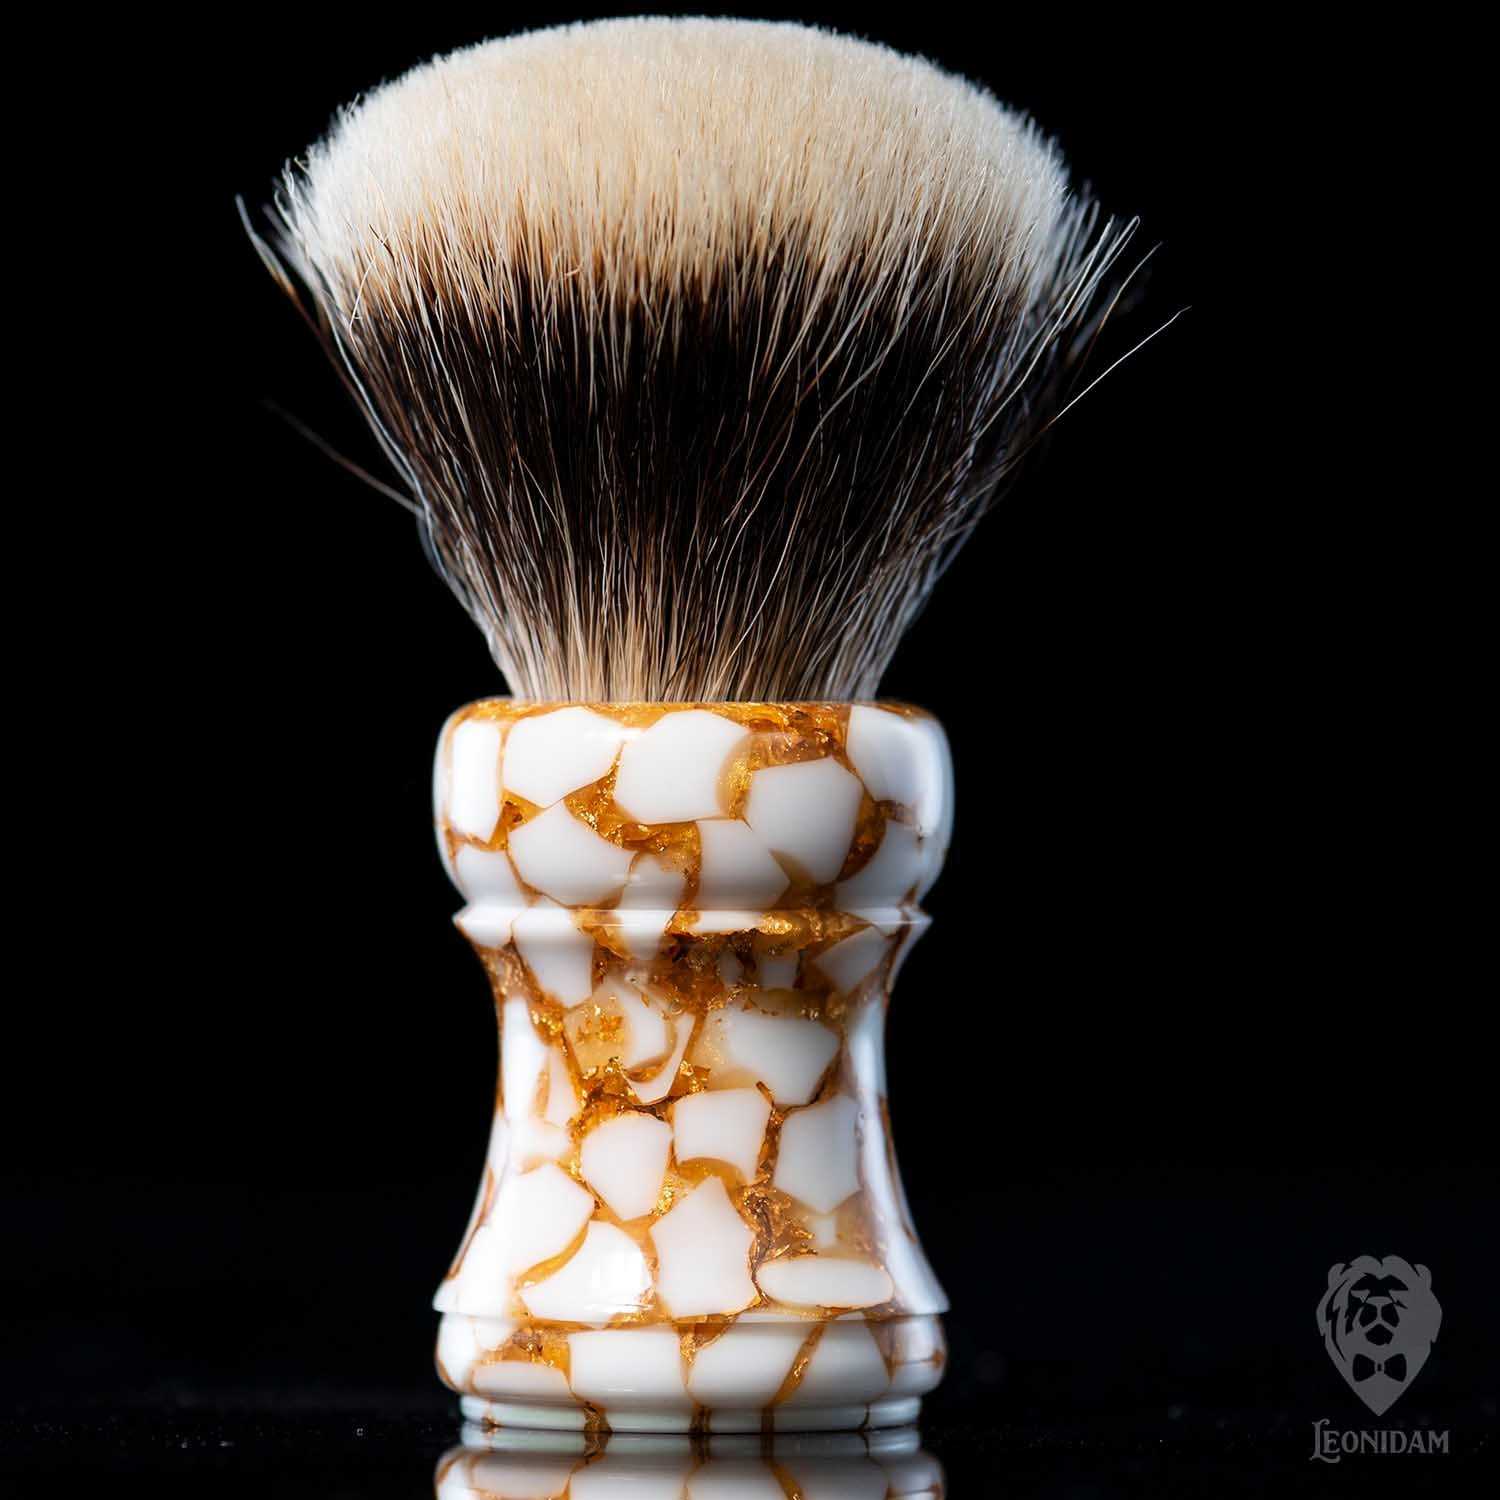 Handmade Shaving Brush "Roma" in polished white and gold resin